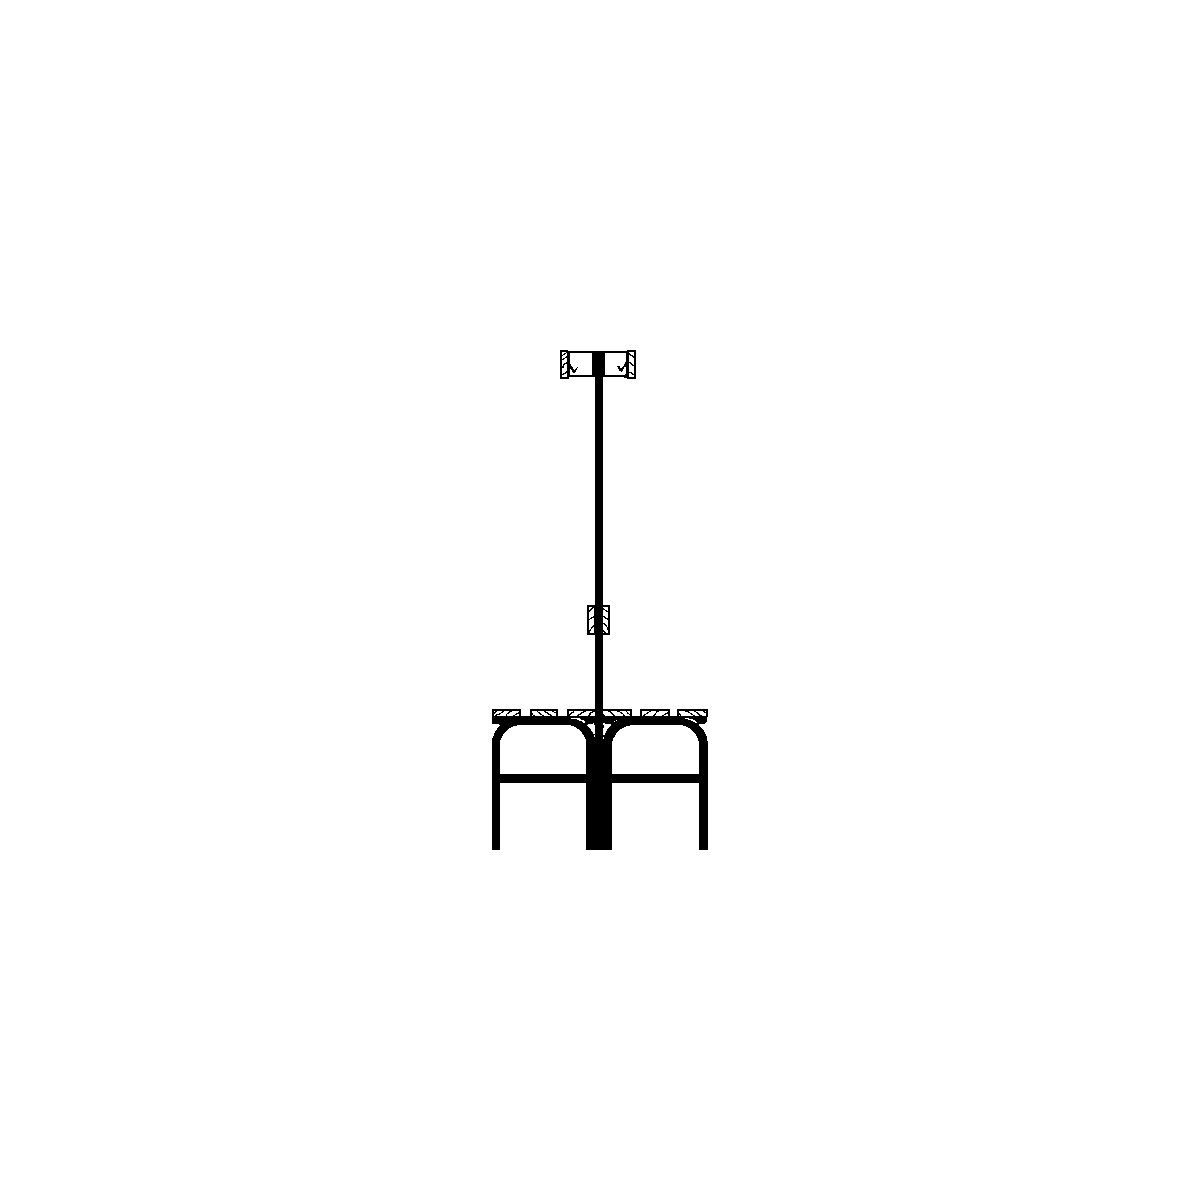 Sypro – Changing room bench with aluminium slats (Product illustration 9)